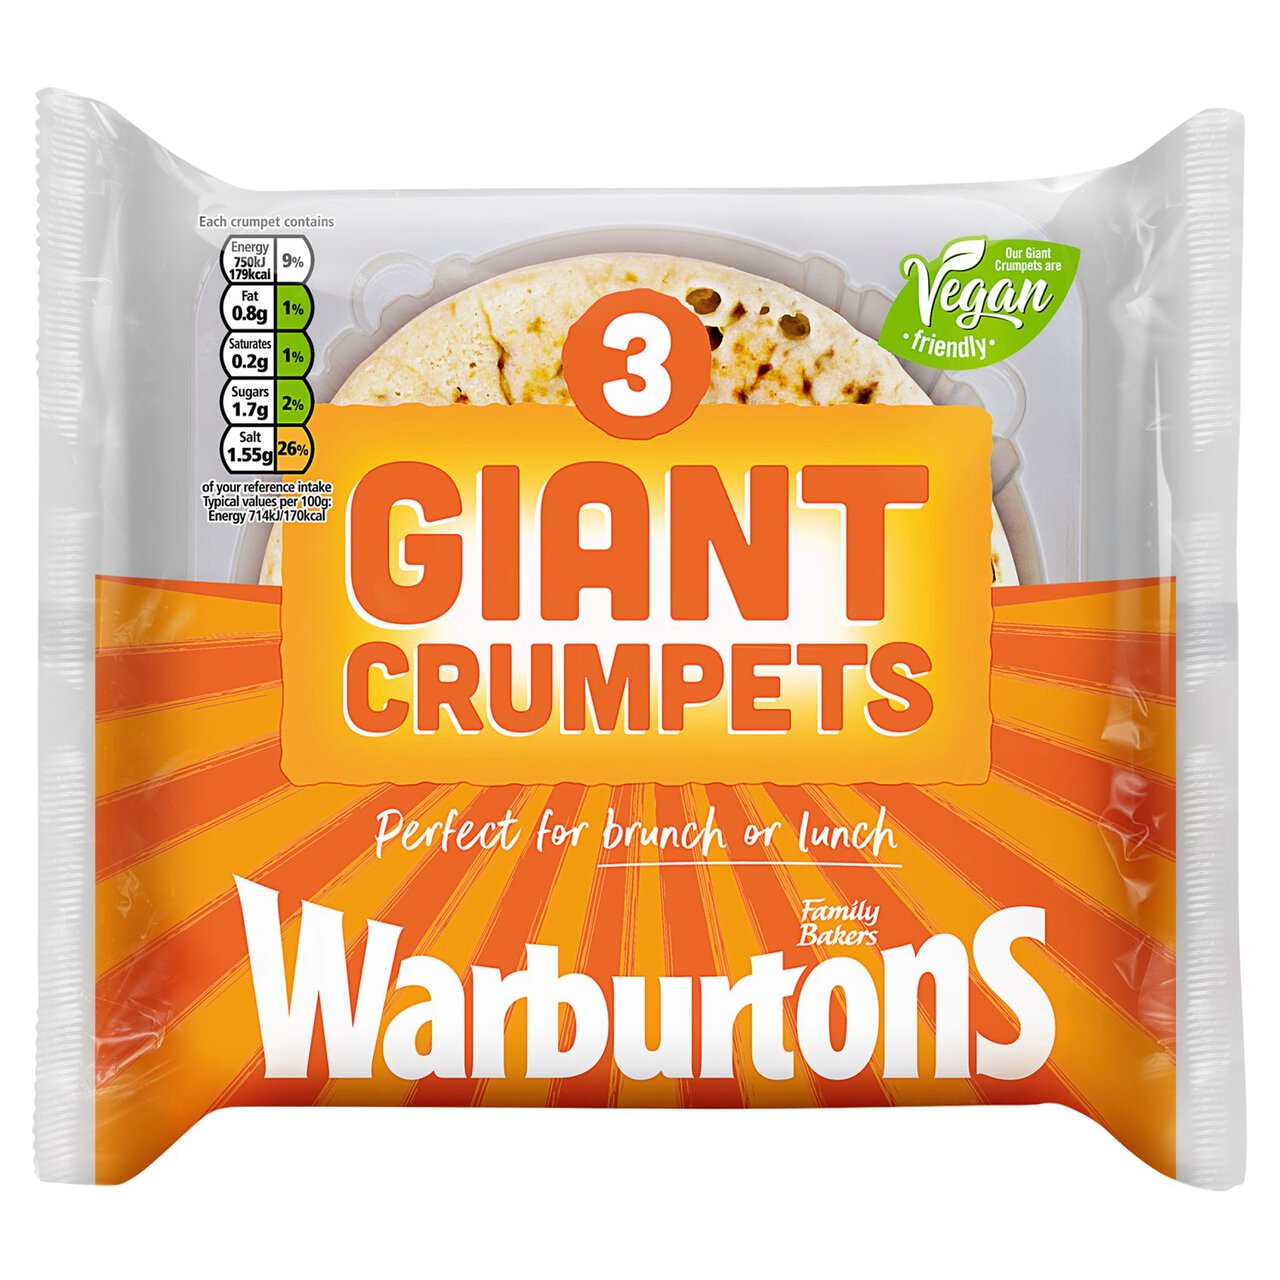 Warburtons 3pk Giant Crumpets 3 per pack